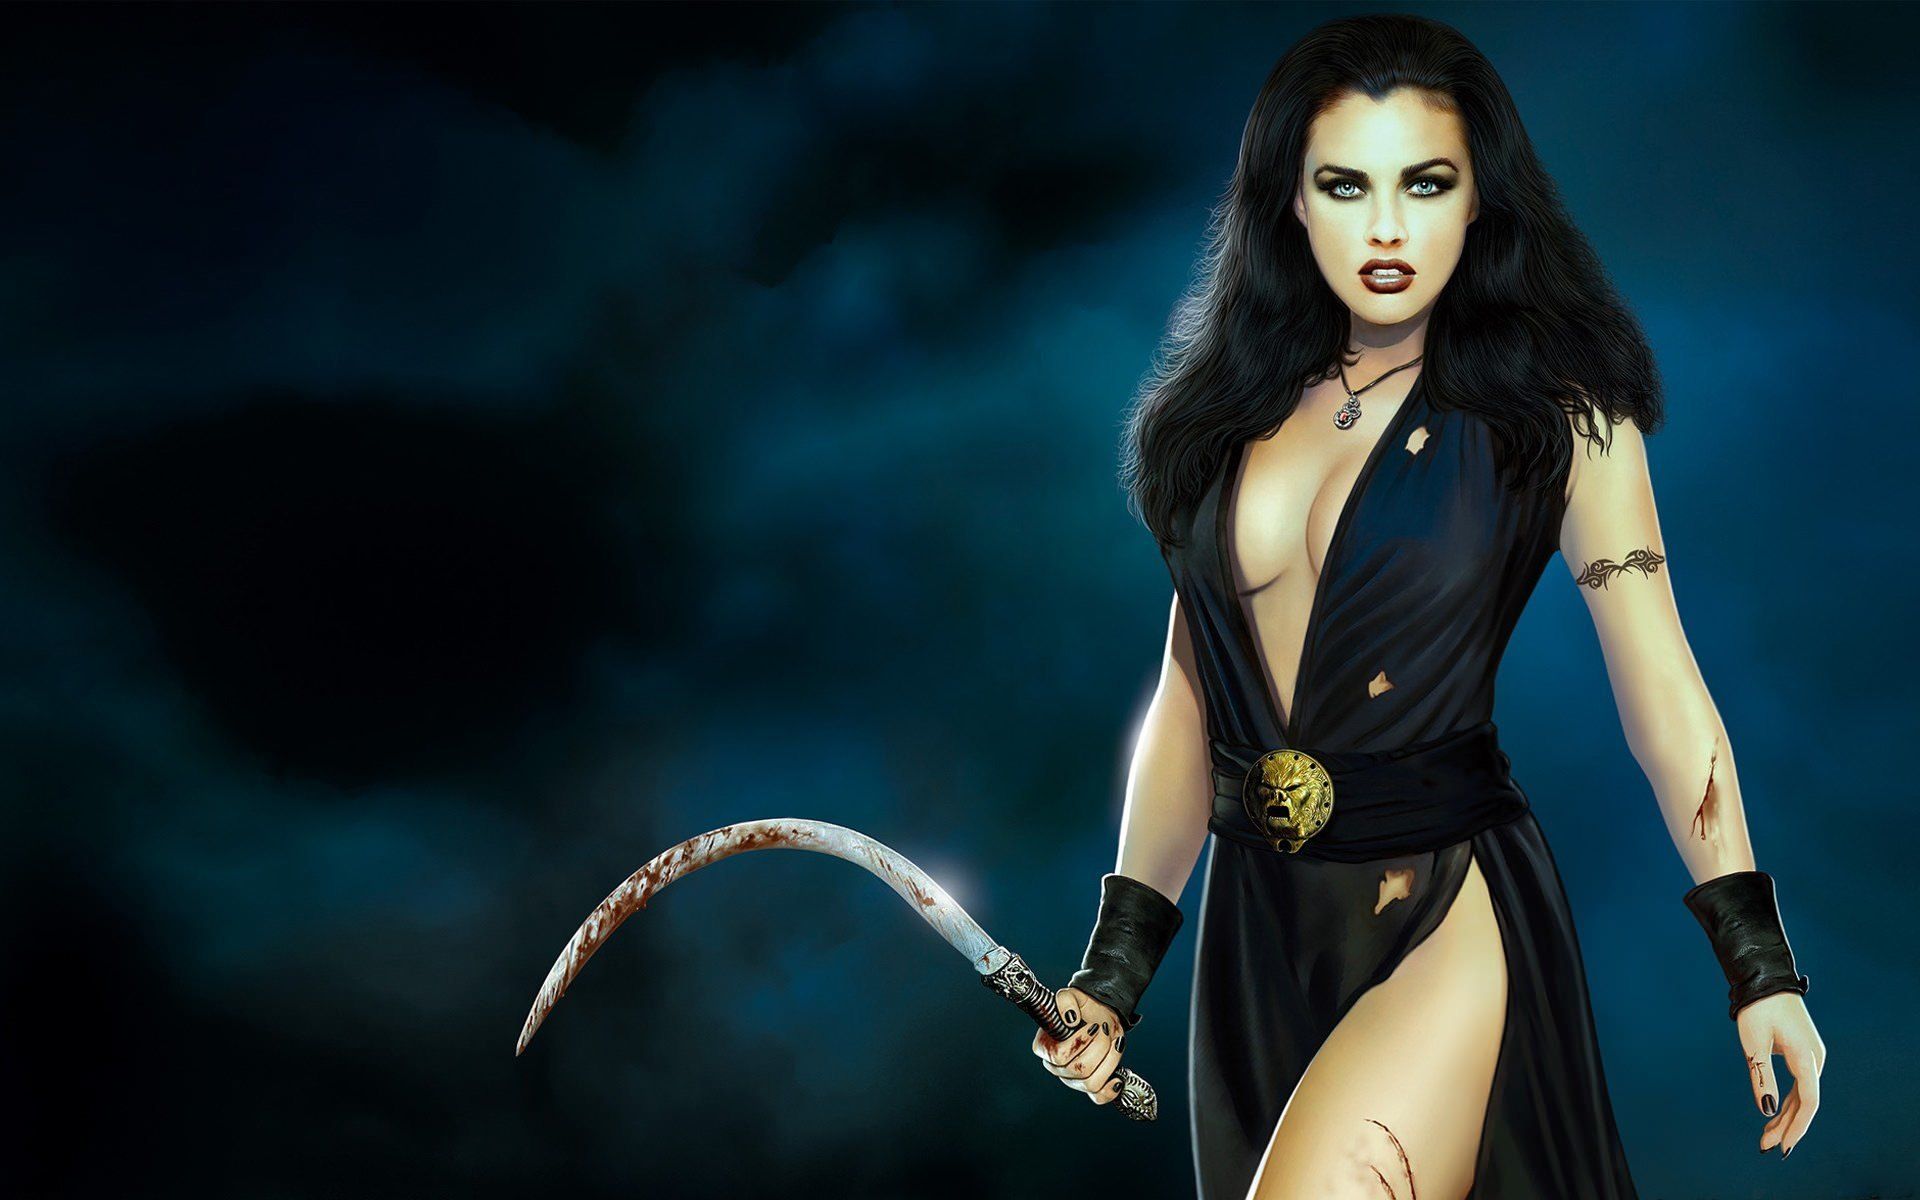 Free download Warrior Women 3D Fantasy Wallpaper Inspirational